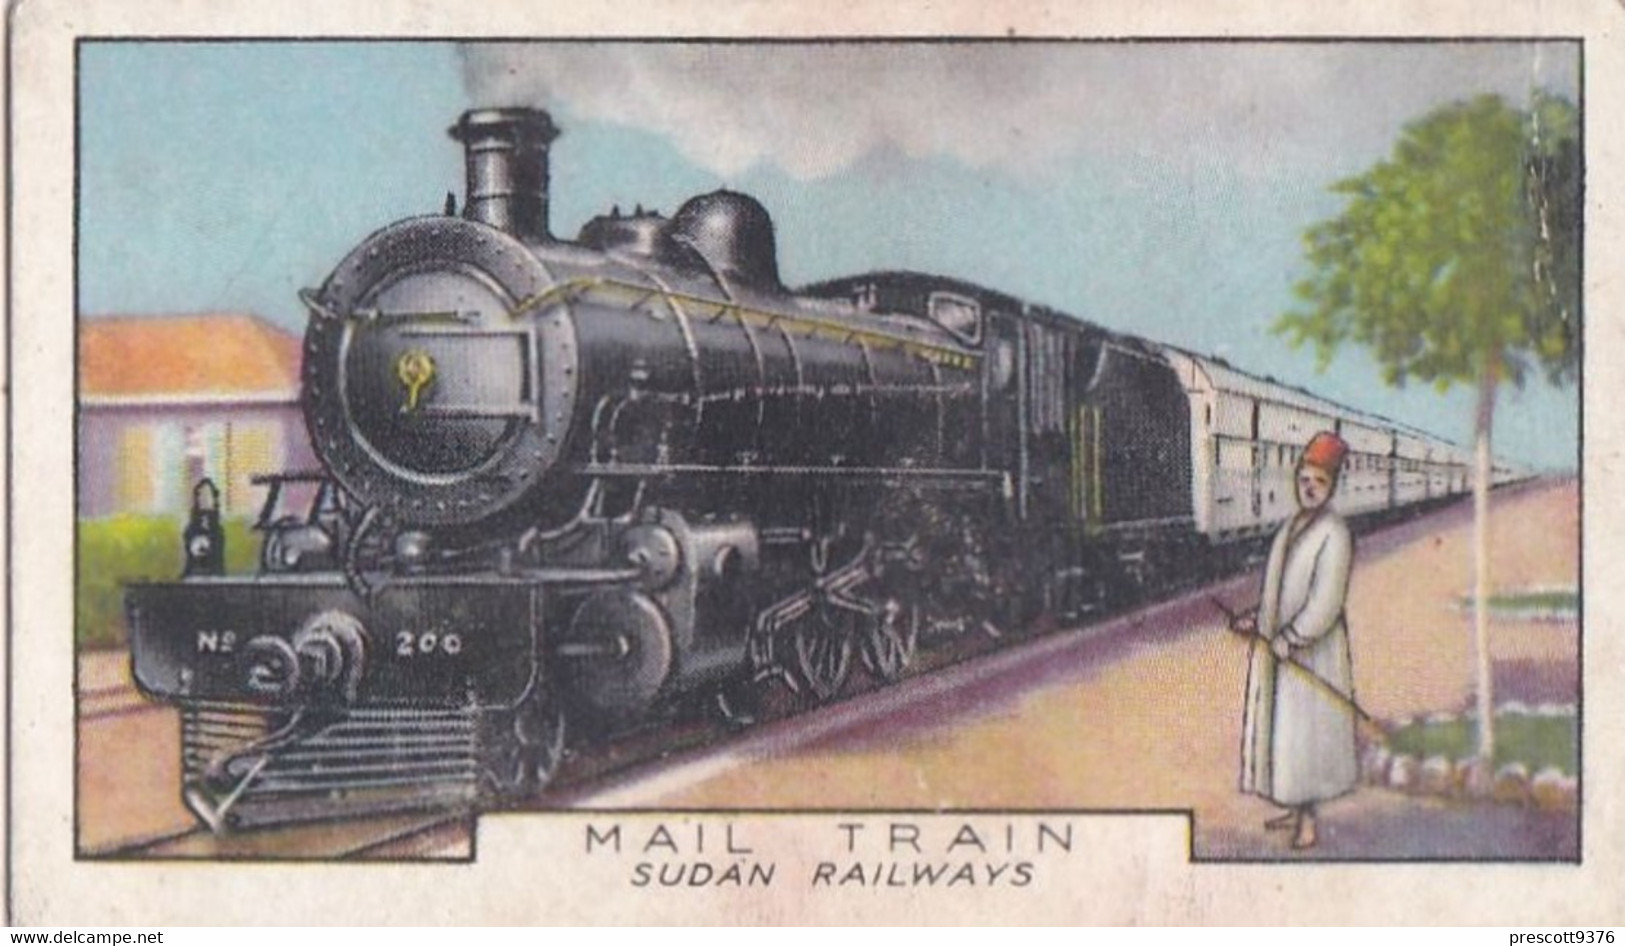 Trains Of The World 1937 - 41 Mail Train, Sudan Railways - Gallaher Cigarette Card - Original - Gallaher